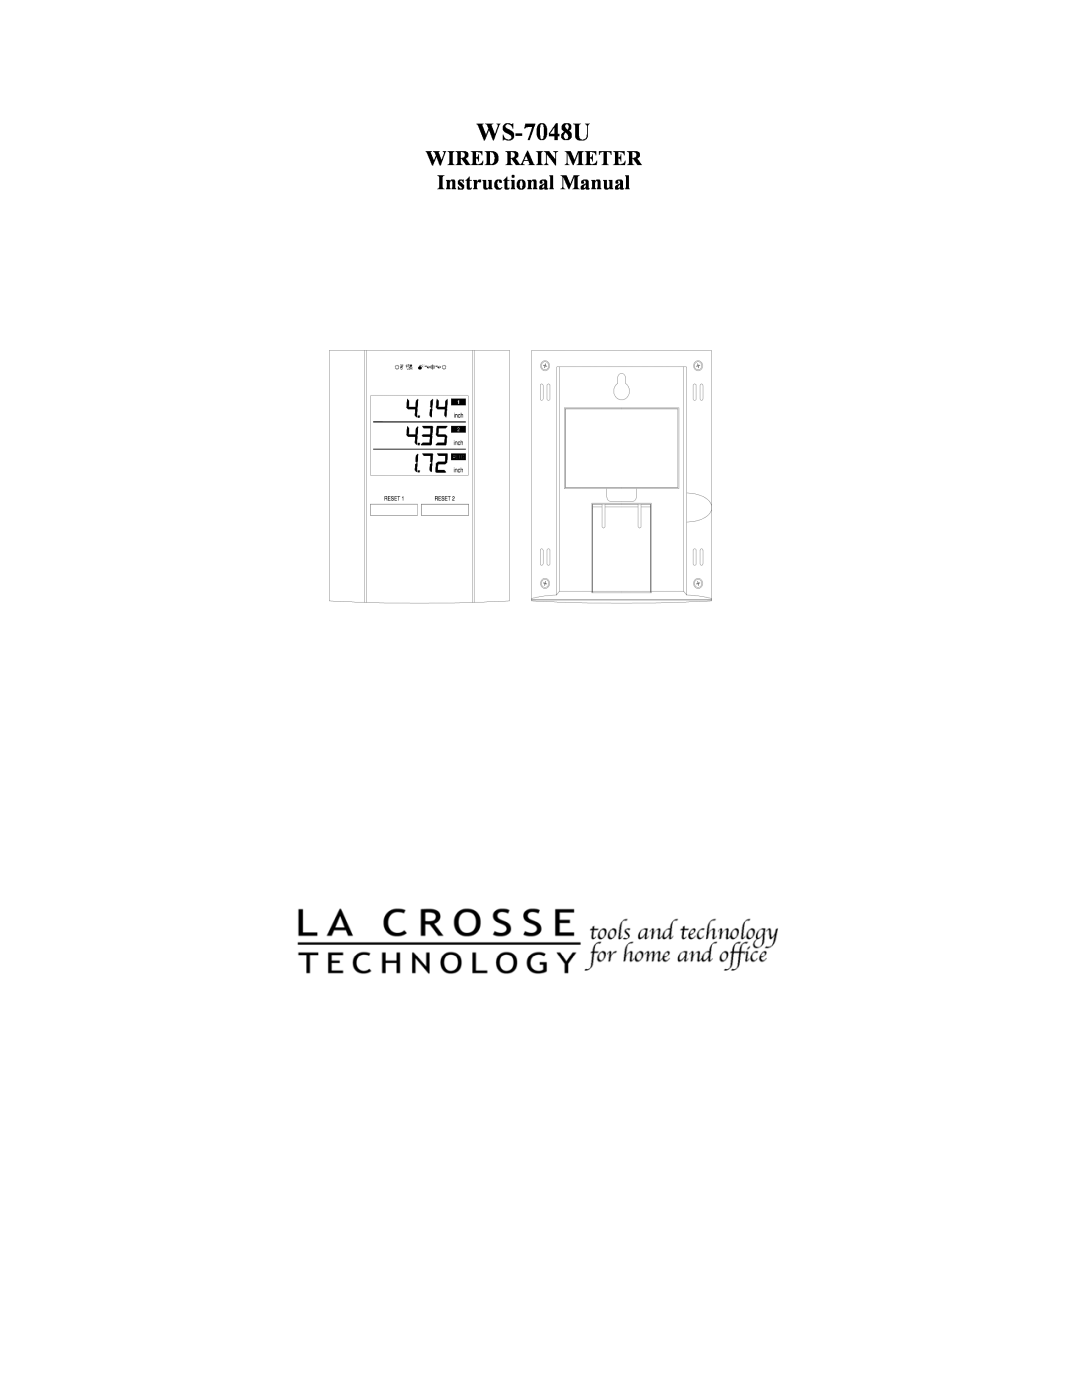 La Crosse Technology WS-7048U manual WIRED RAIN METER Instructional Manual 